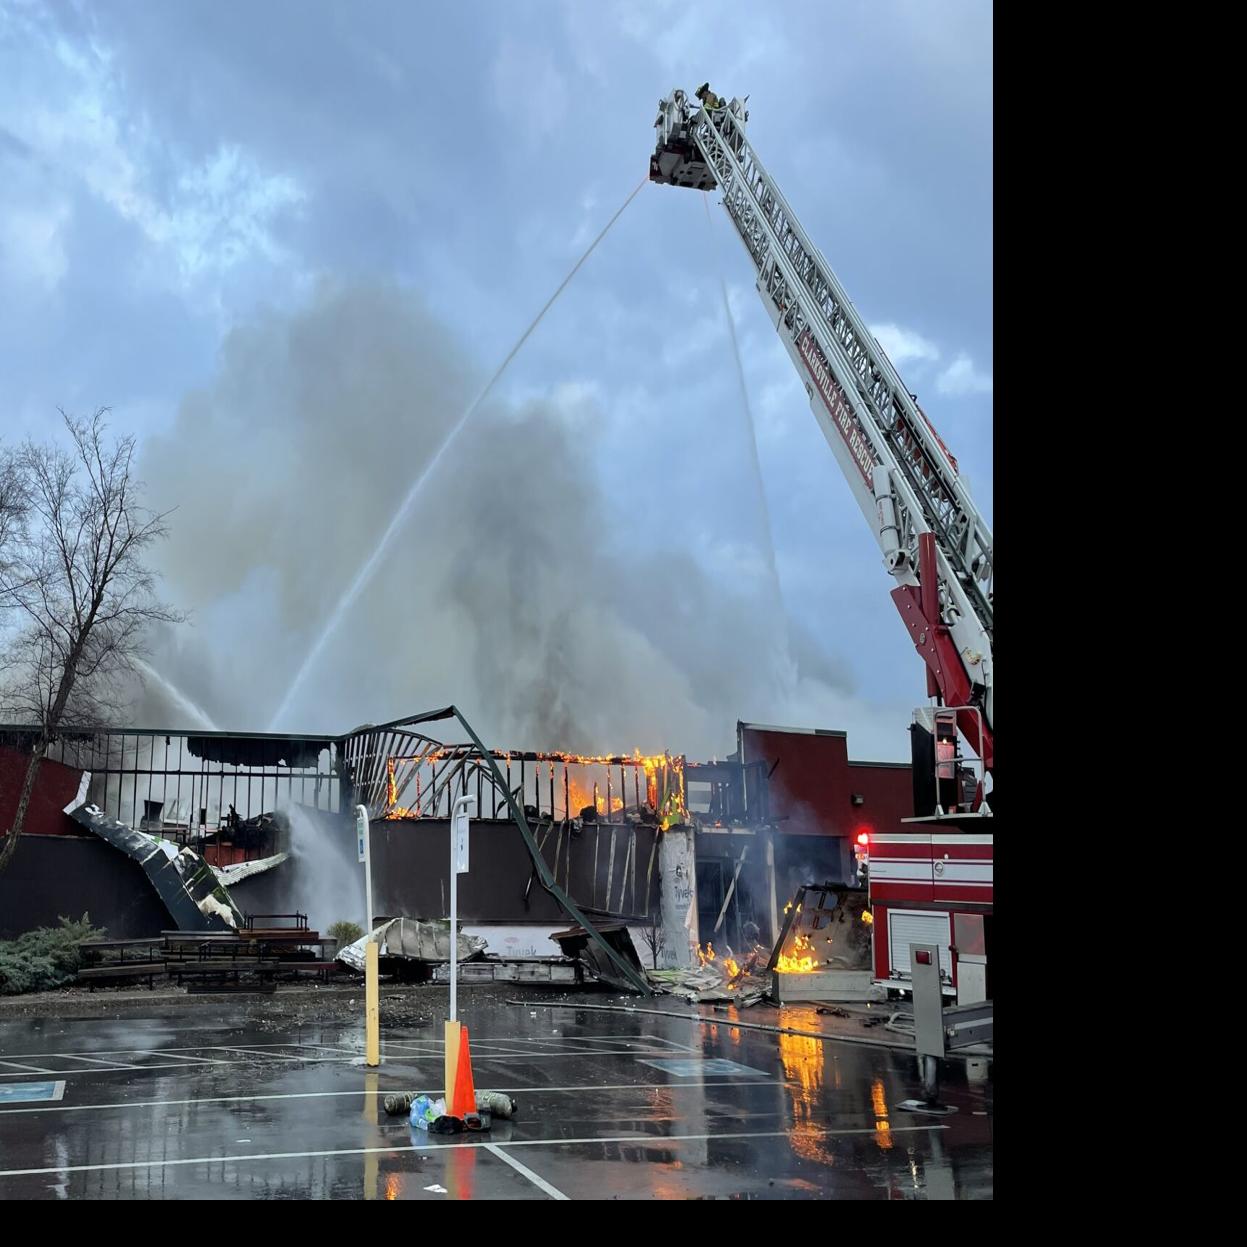 Restaurant fire sparks Somerset evacuation